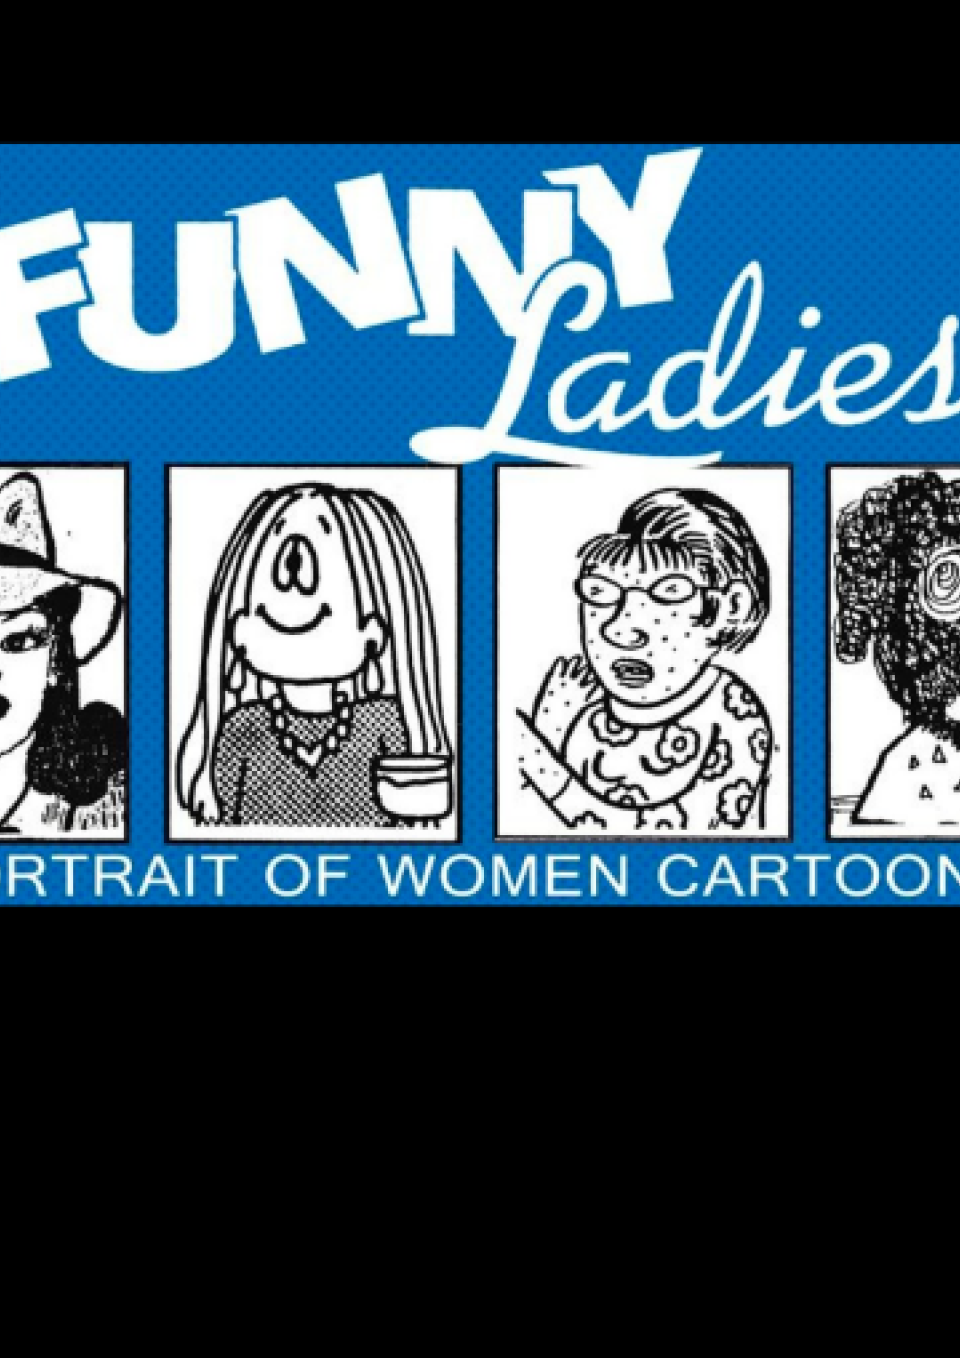 Funny Ladies film poster